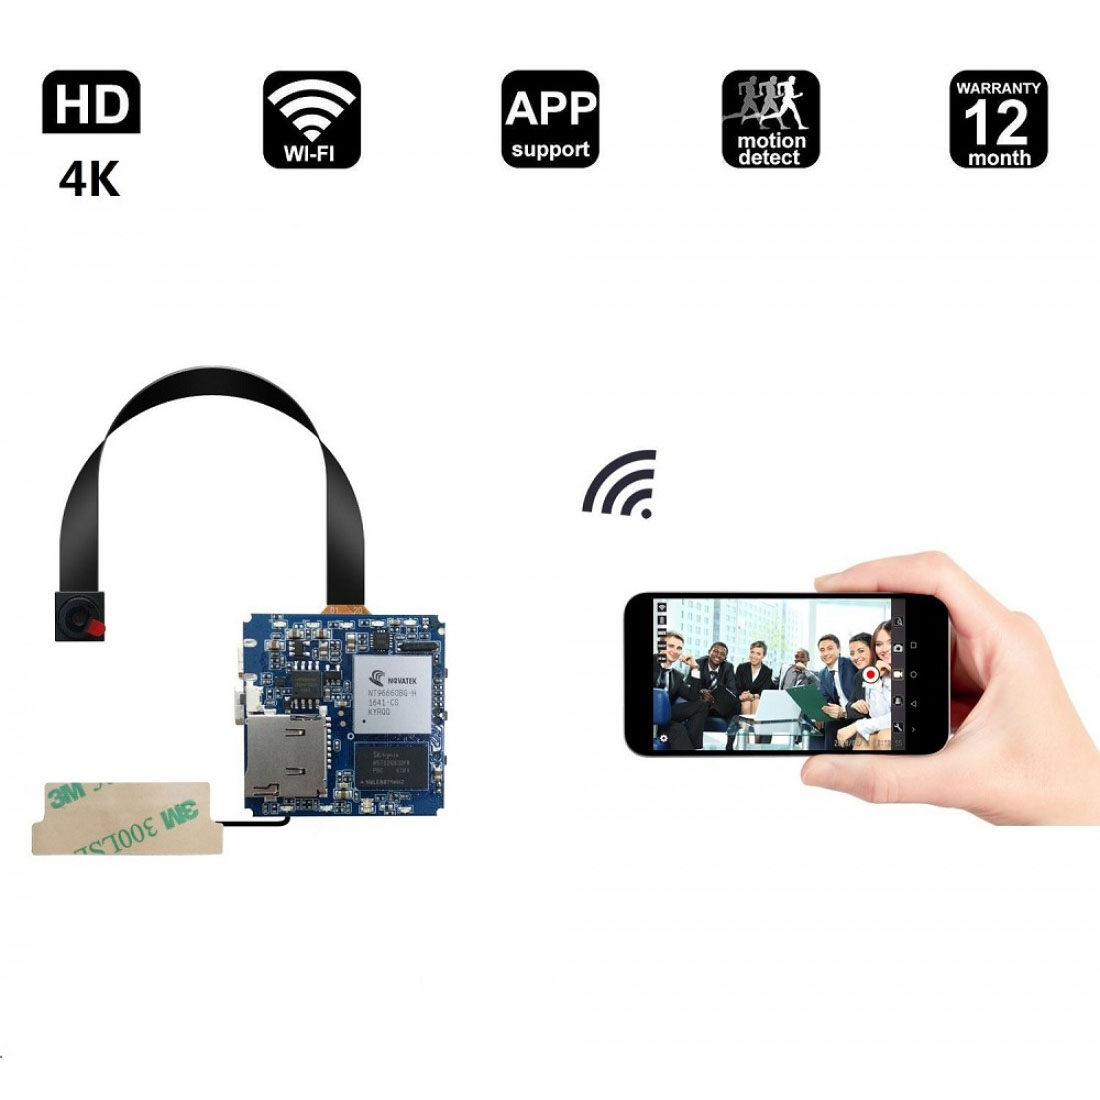 4K Mini-Kamera, Full 1080p HD versteckte Kamera, WIFI Wireless [Bewegungserkennung, DIY-Kamera, App-Steuerung] Nanny Cam | Heim, Kinder, Baby, Haustierüberwachungskamera